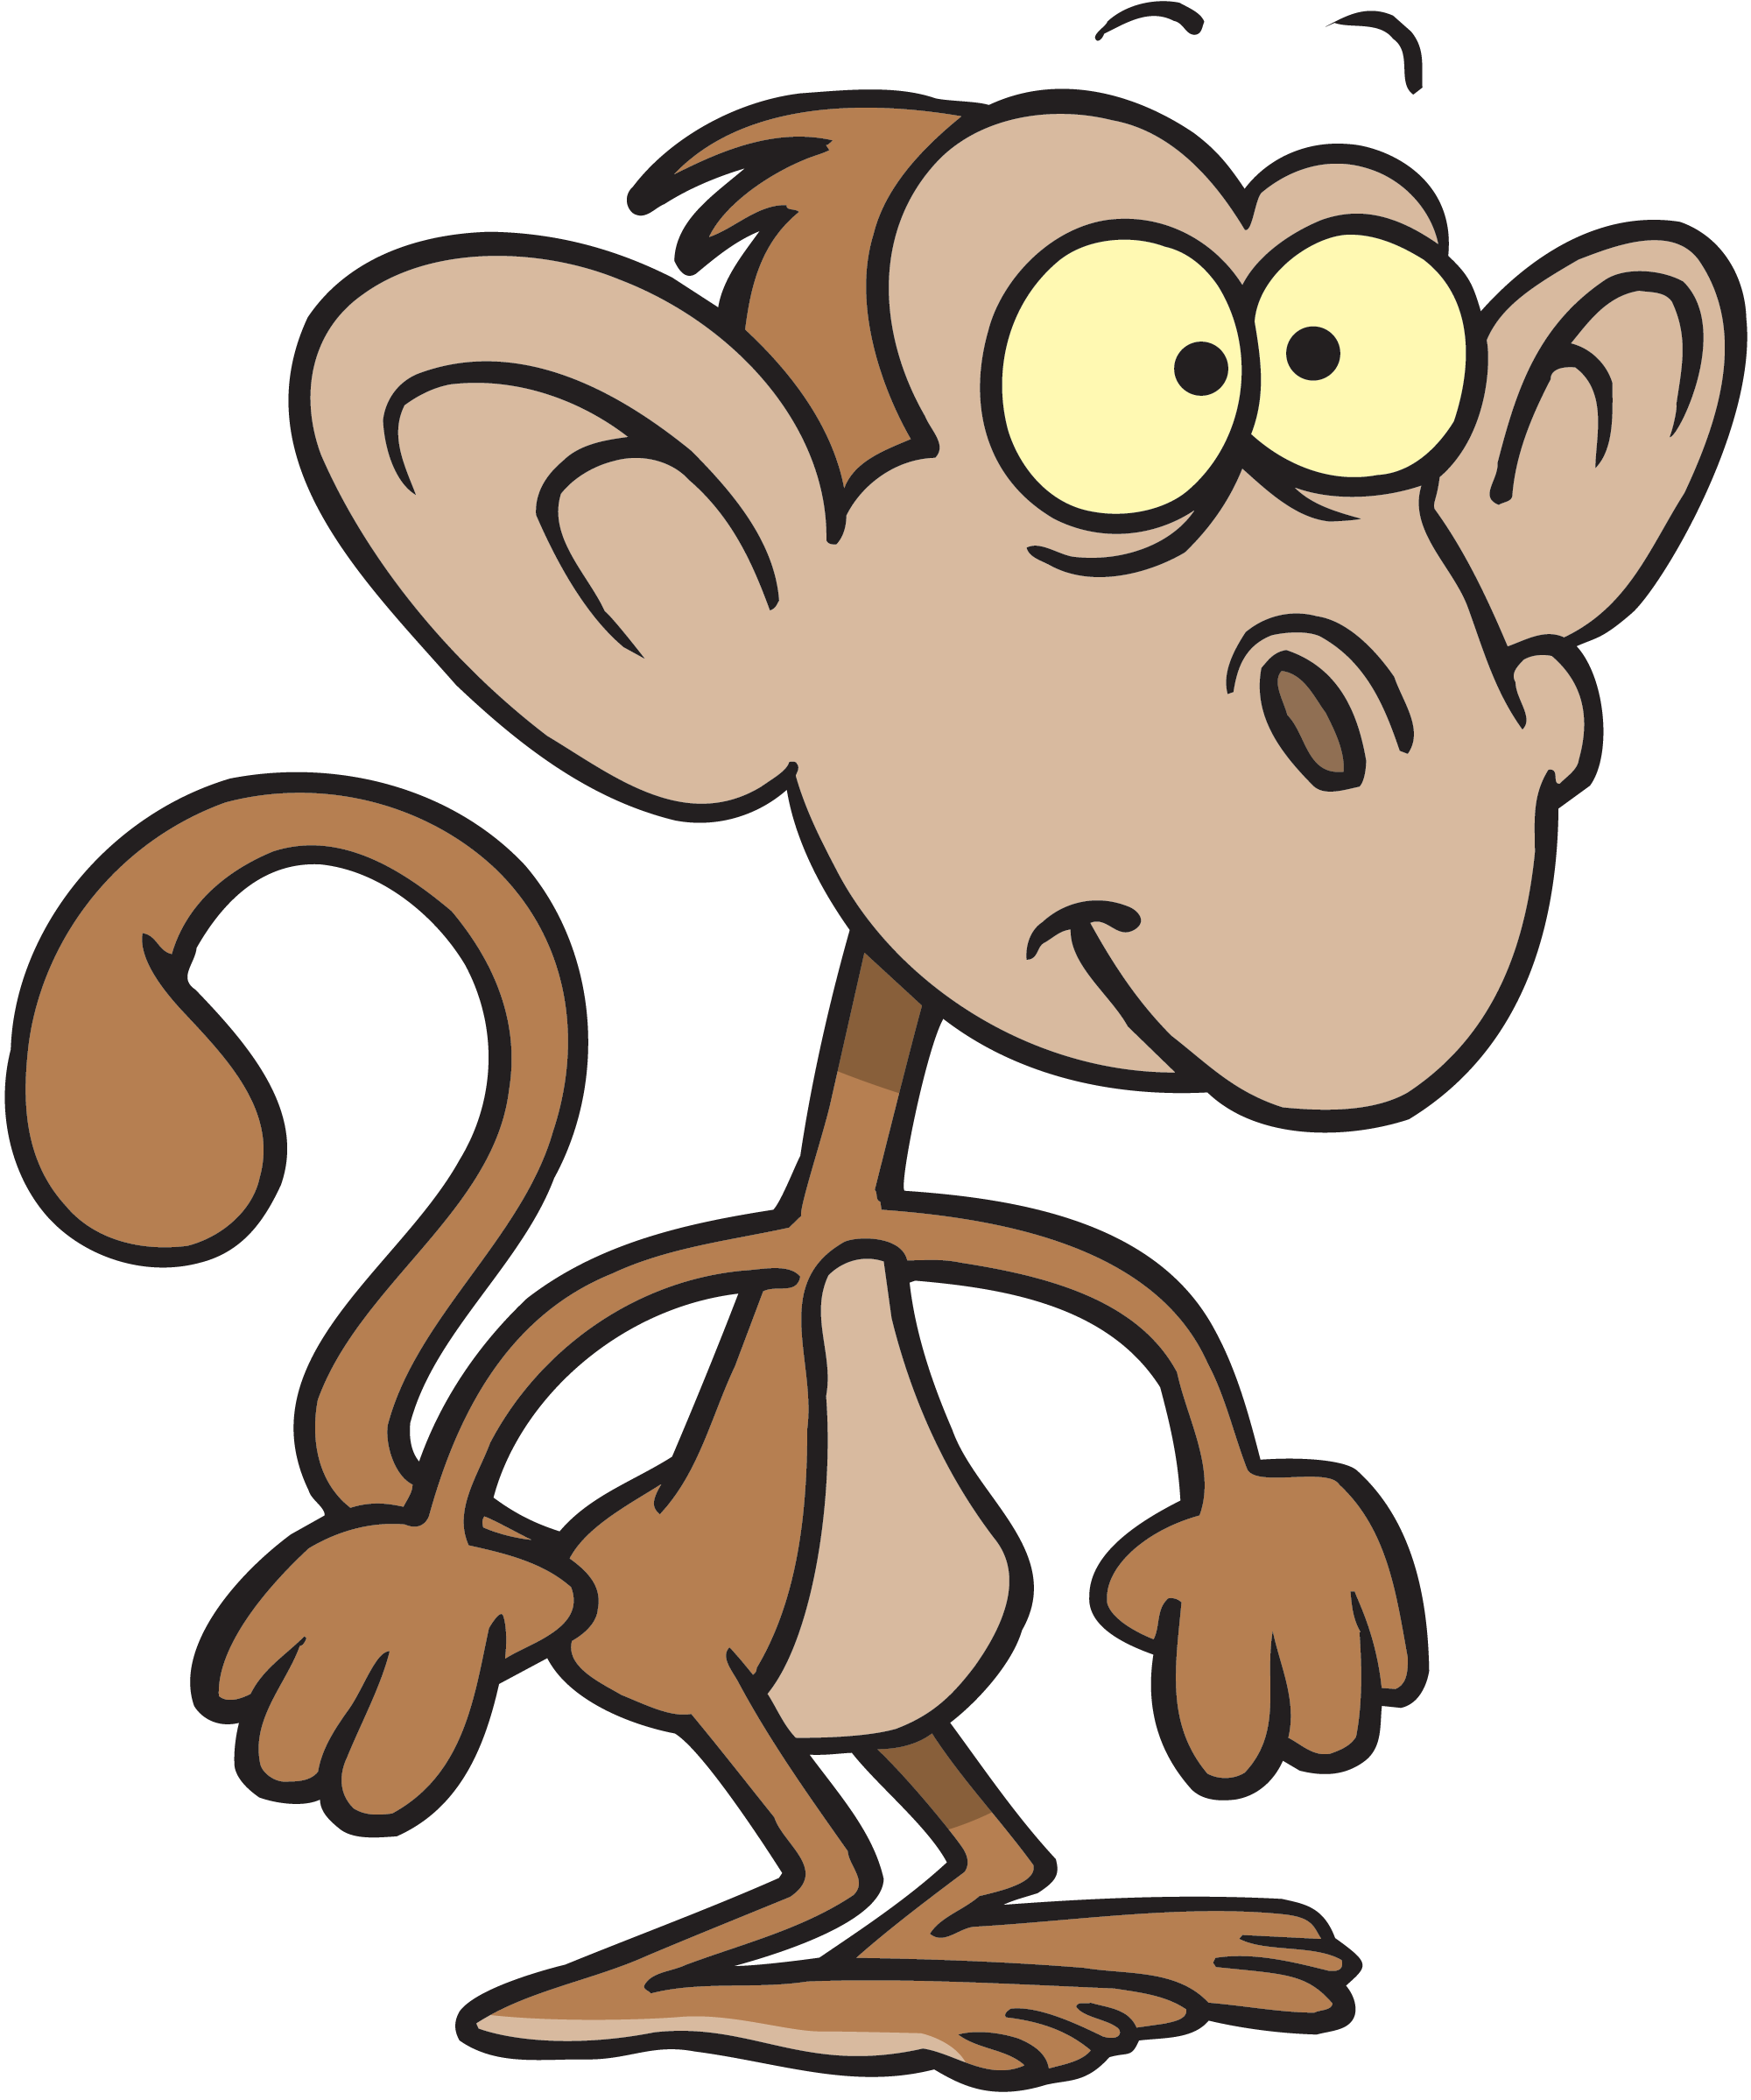 Funny Monkey PNG HD - 130164